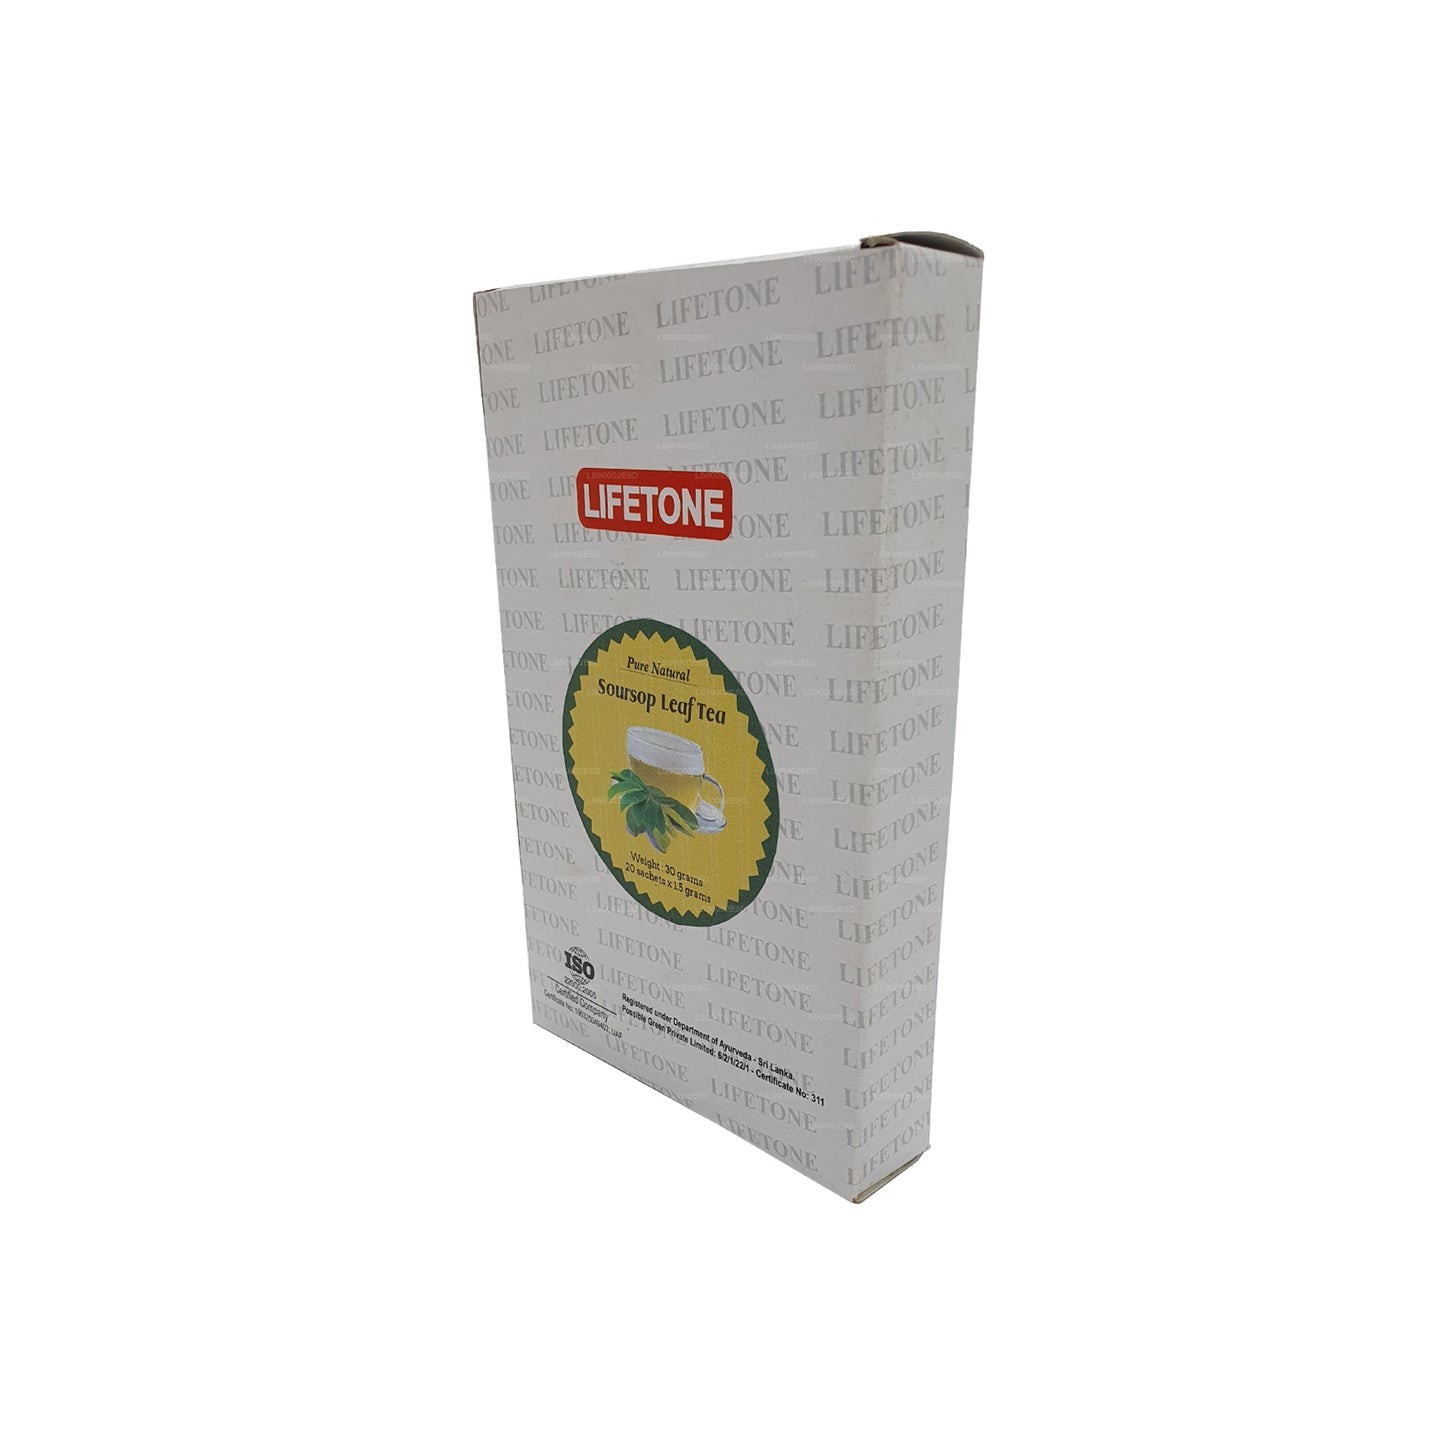 Lifetone Soursop Leaf Tea (30g) 20 Tea Bags